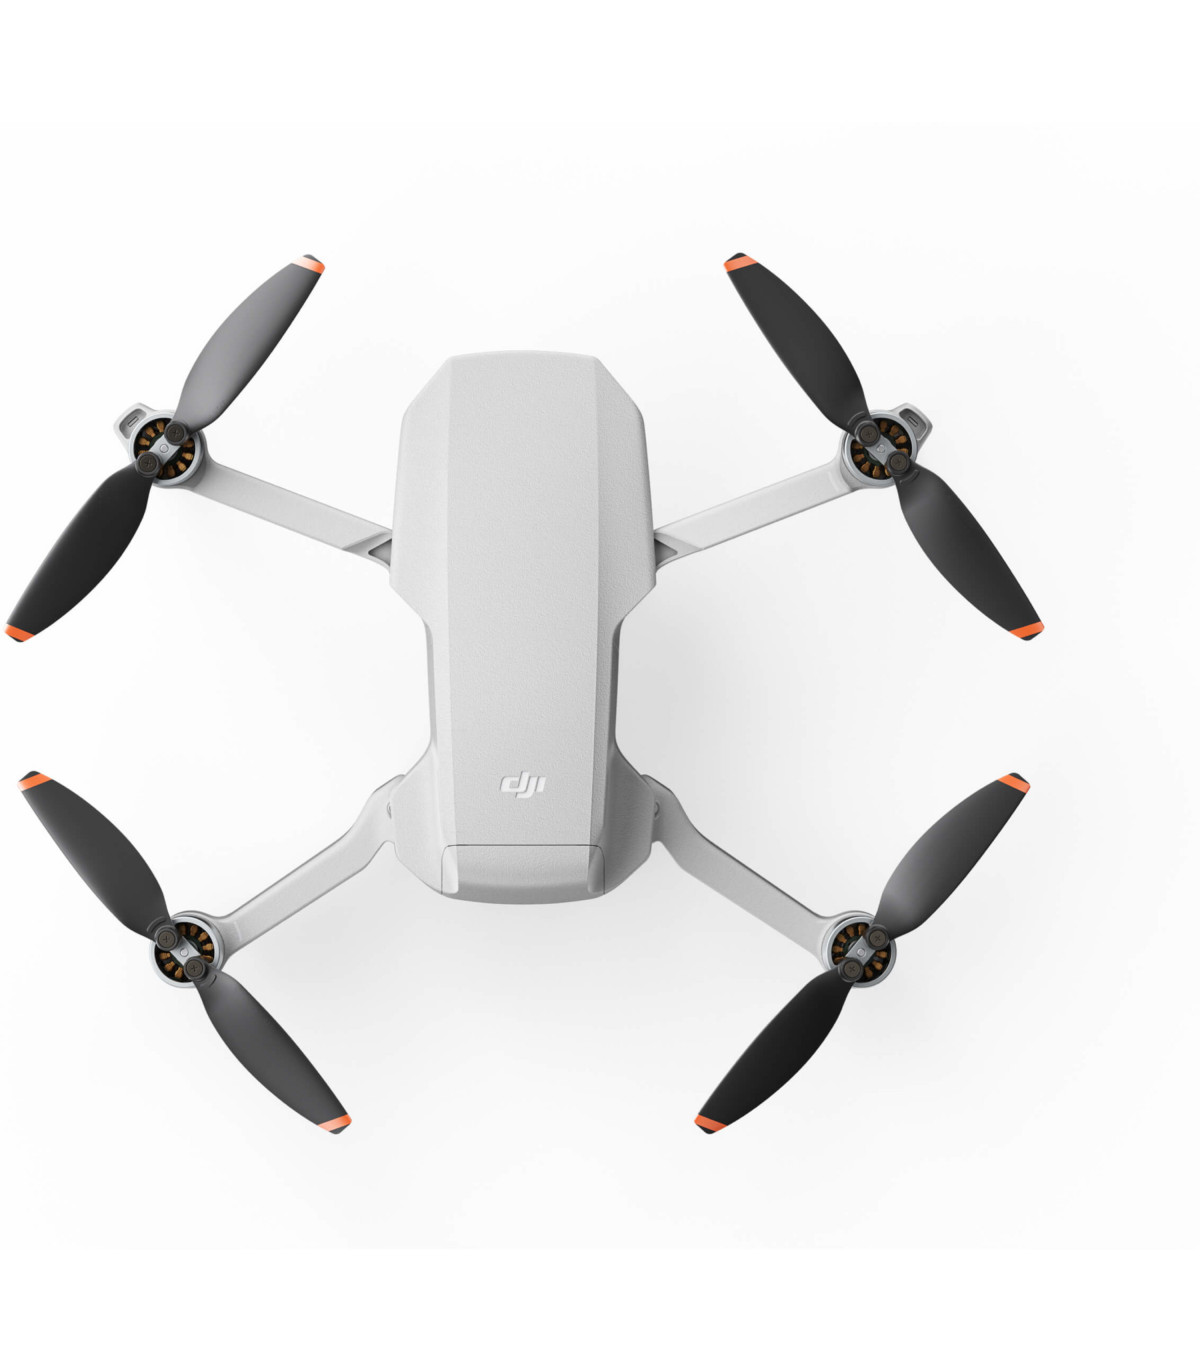 Mini 2 SE - Iprosurv Ltd Innovative Drone Solutions